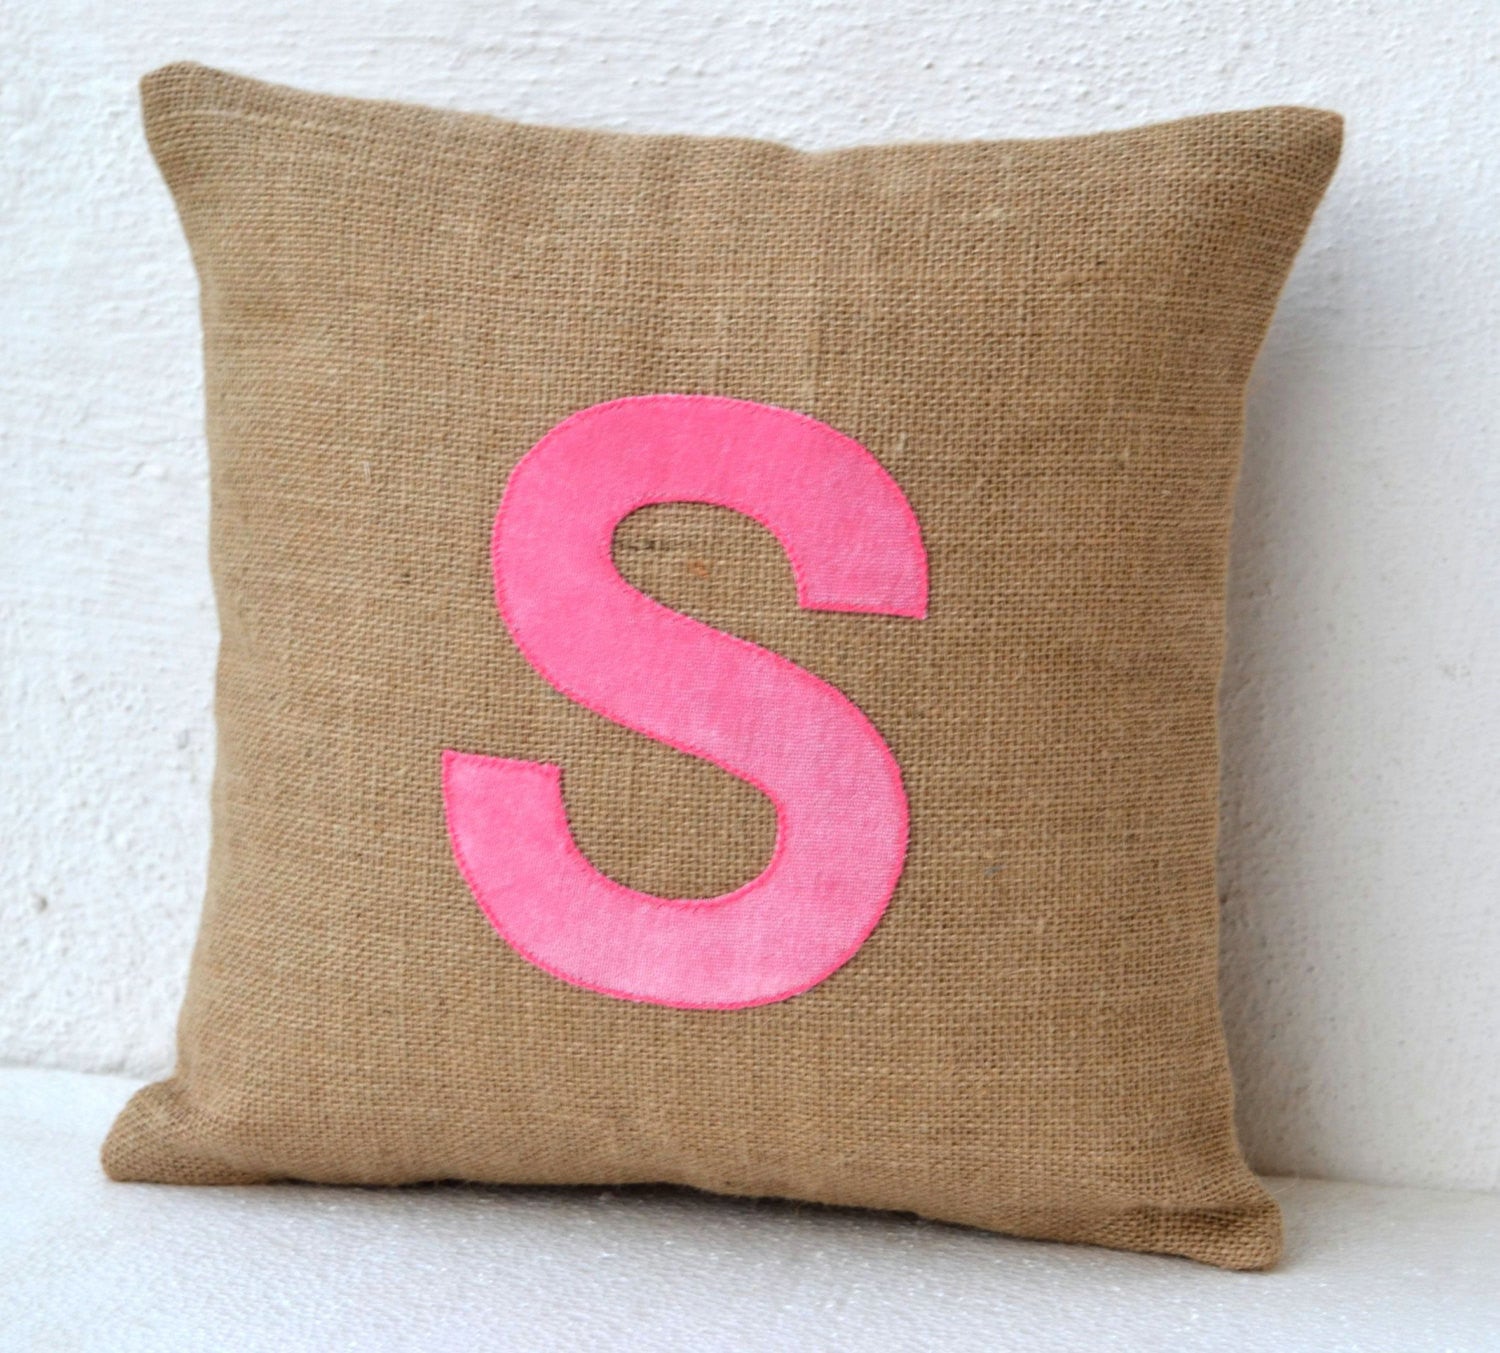 Handmade burlap throw pillow with monogram